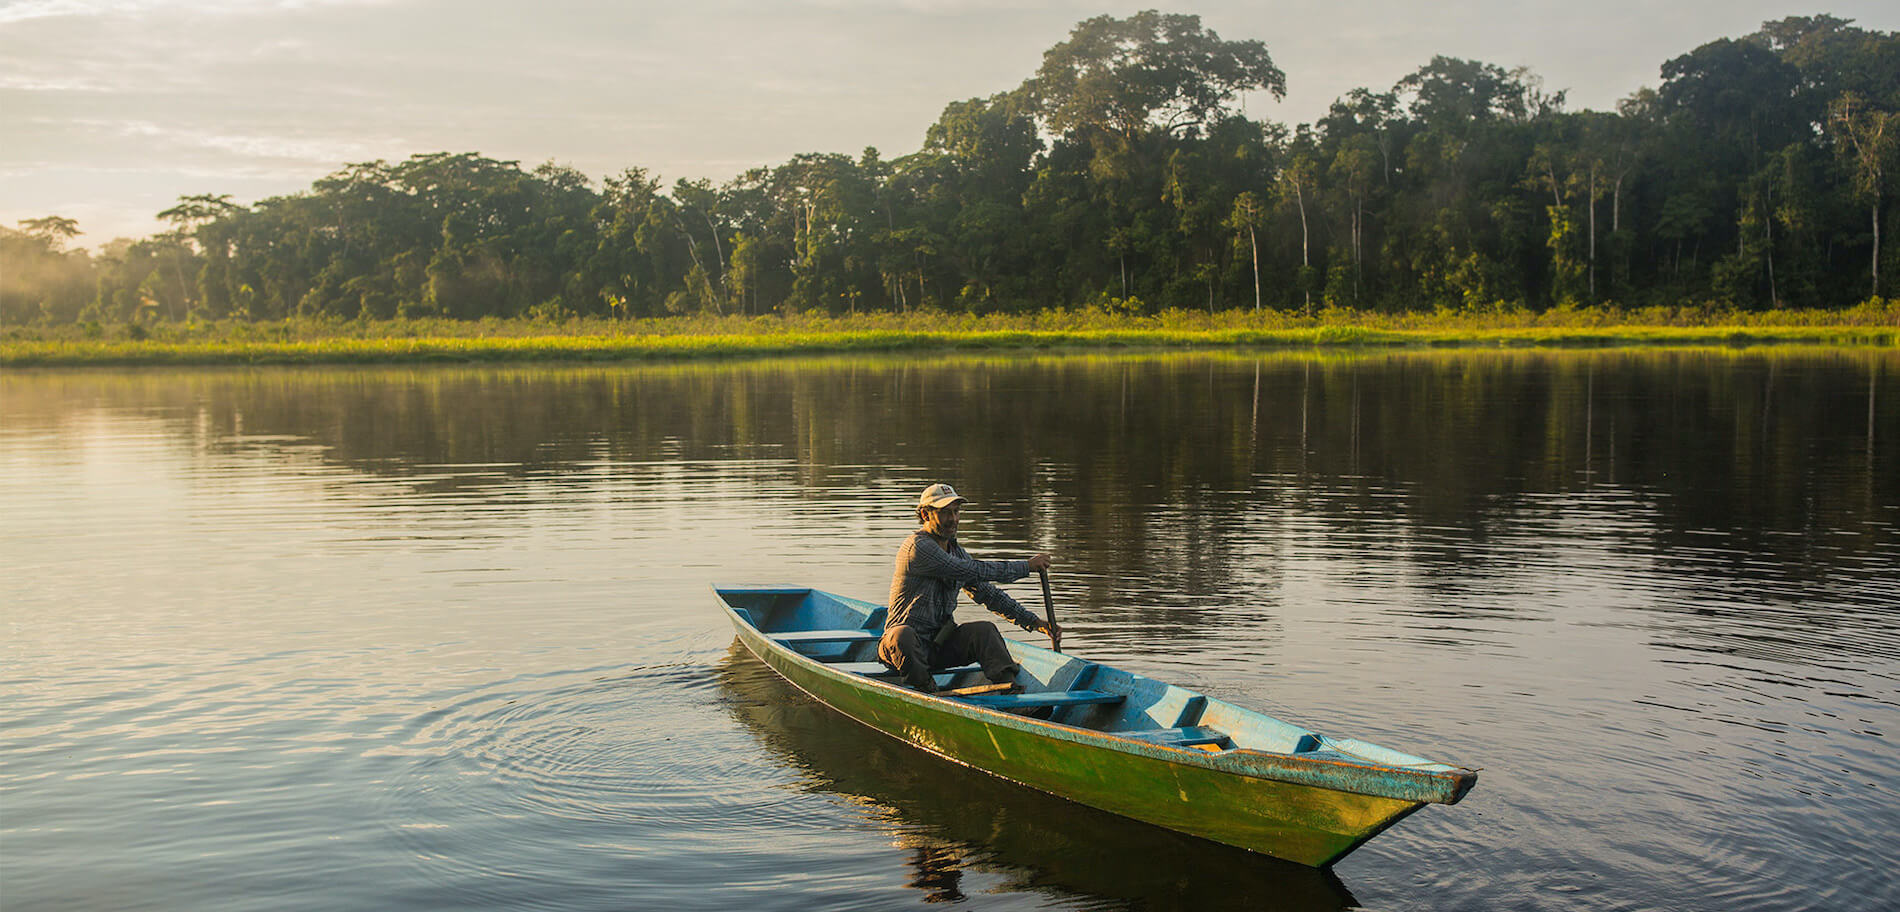 Amazon Expedition Rainforest Tour in Peru